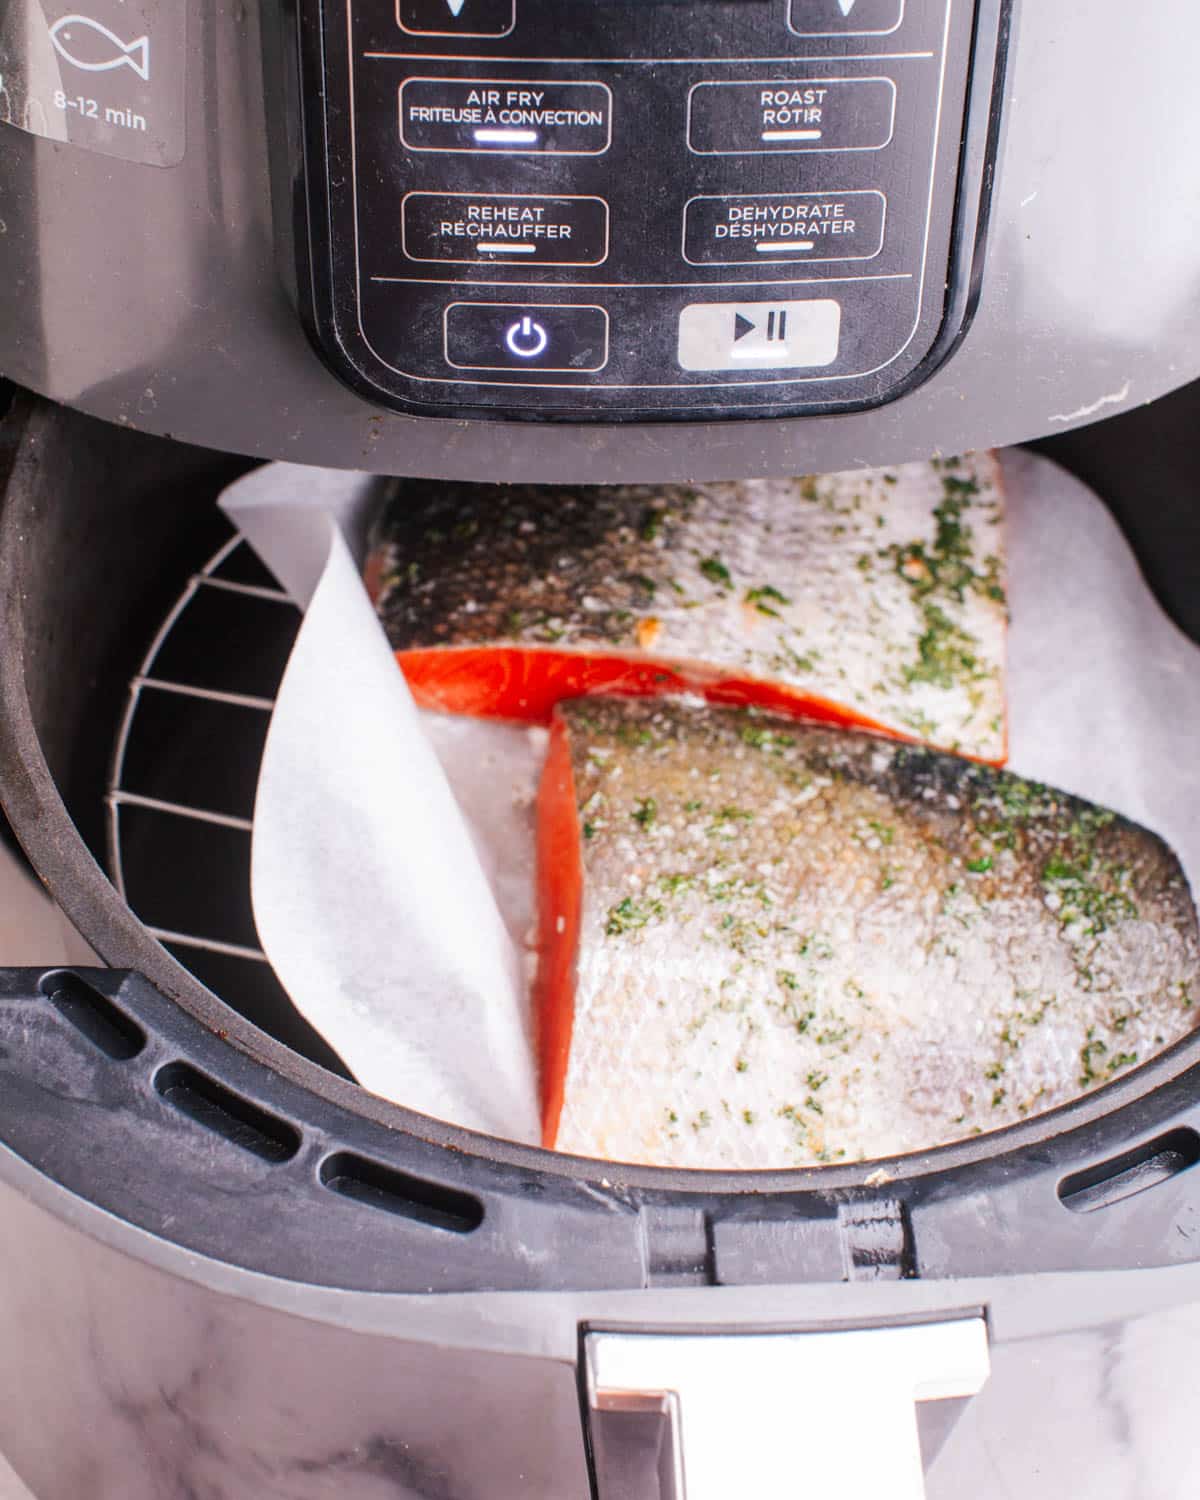 Putting salmon fillet in air fryer.